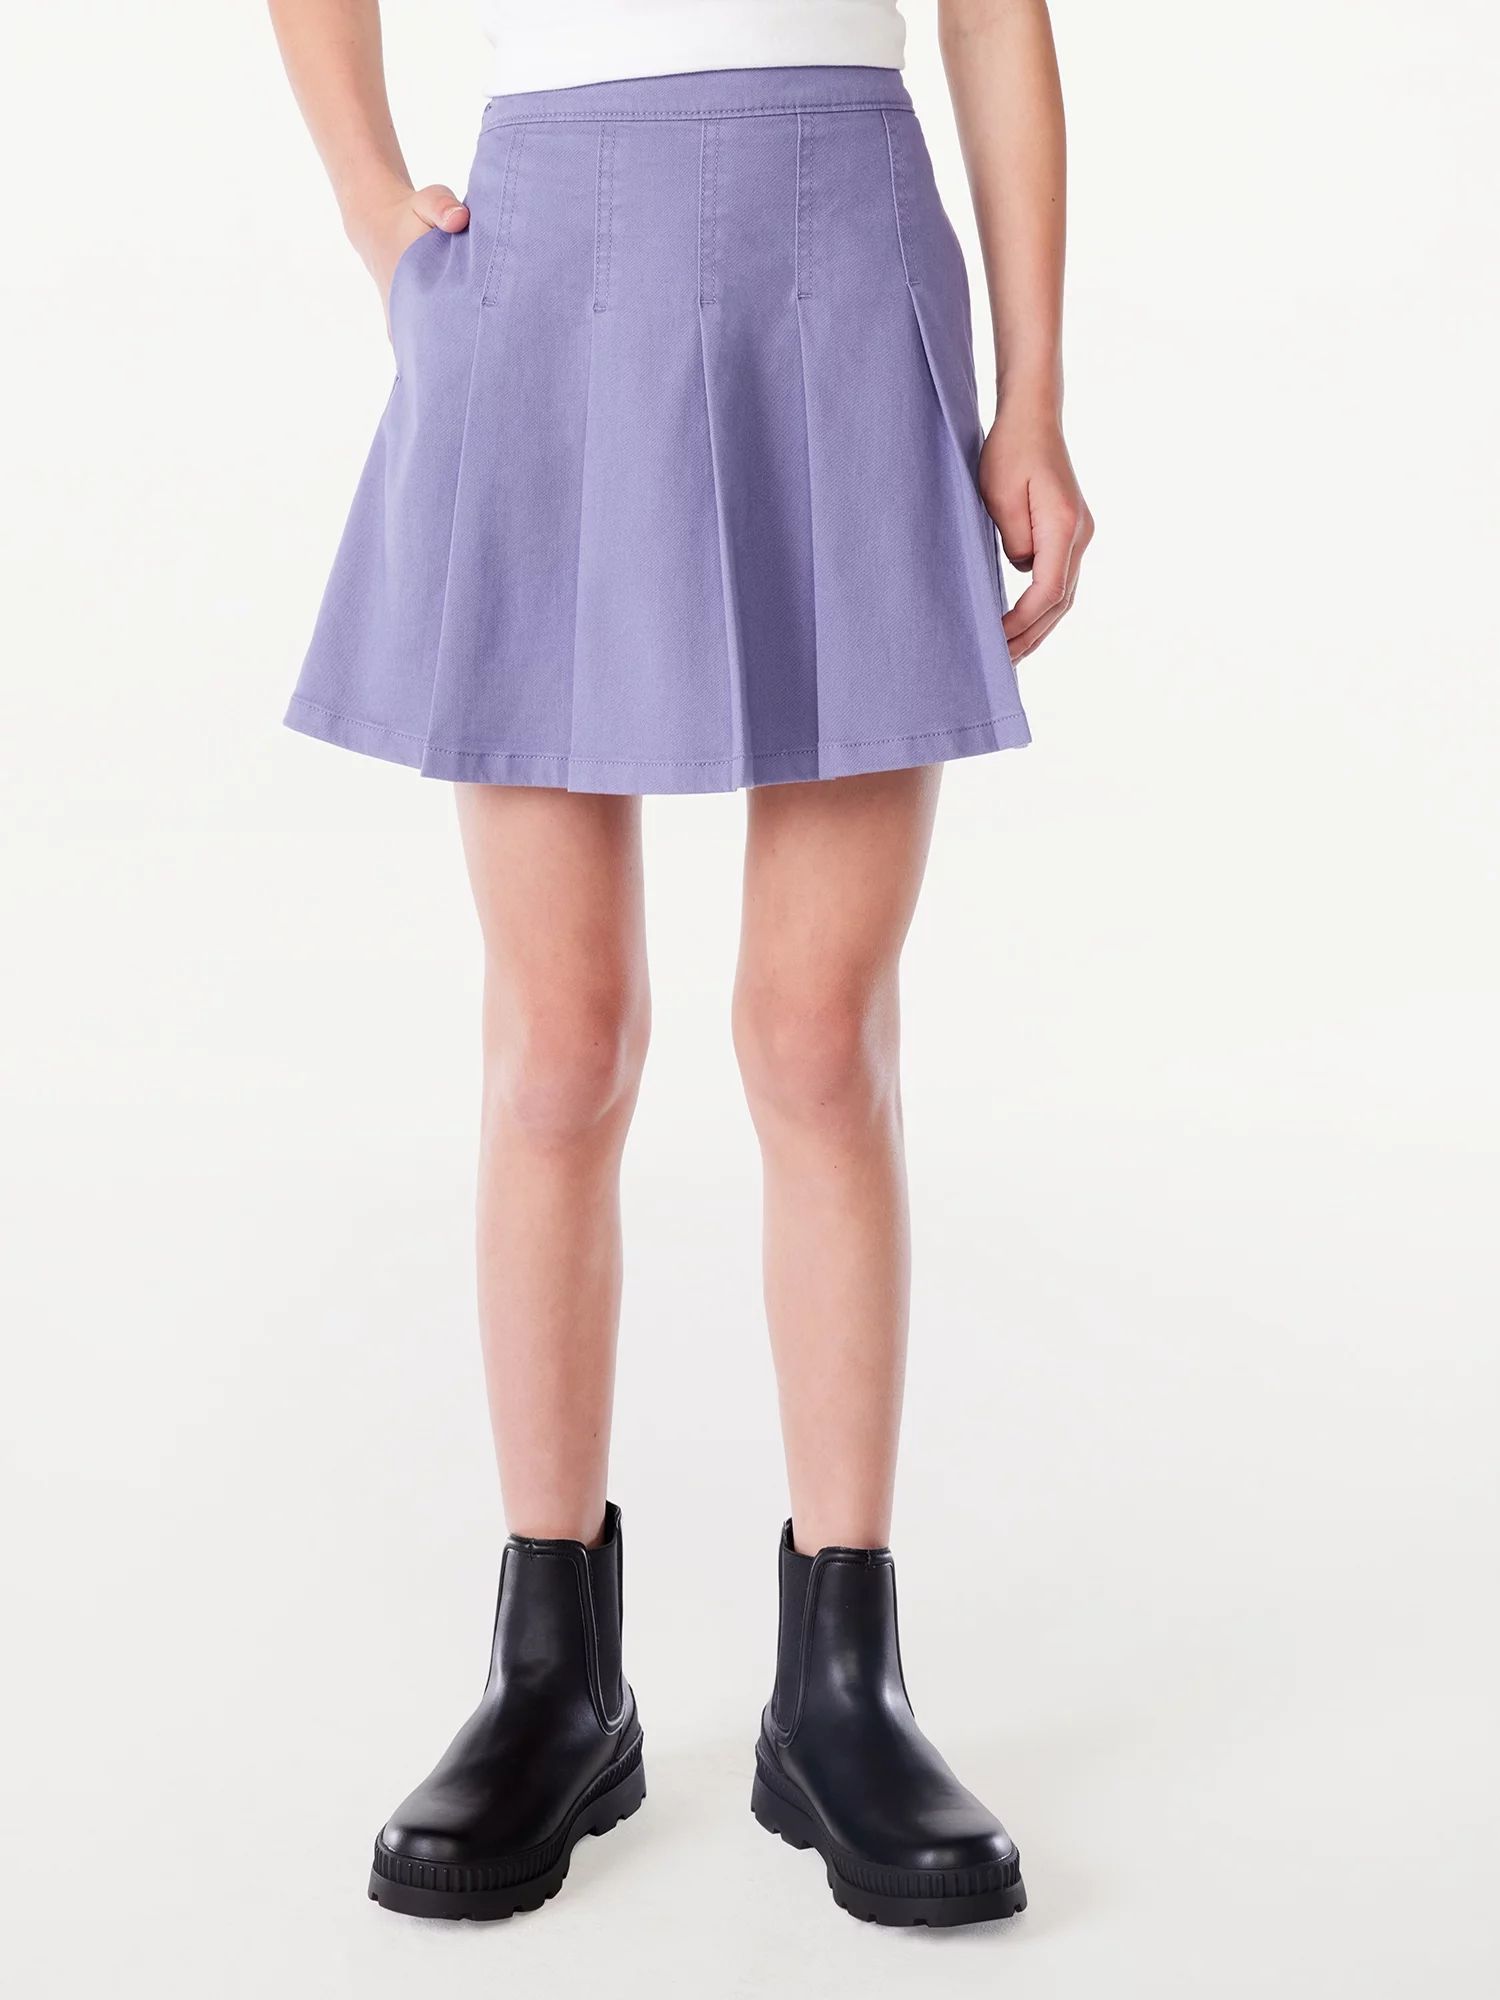 Free Assembly Girls Pleated Skirt, Sizes 4-18 | Walmart (US)